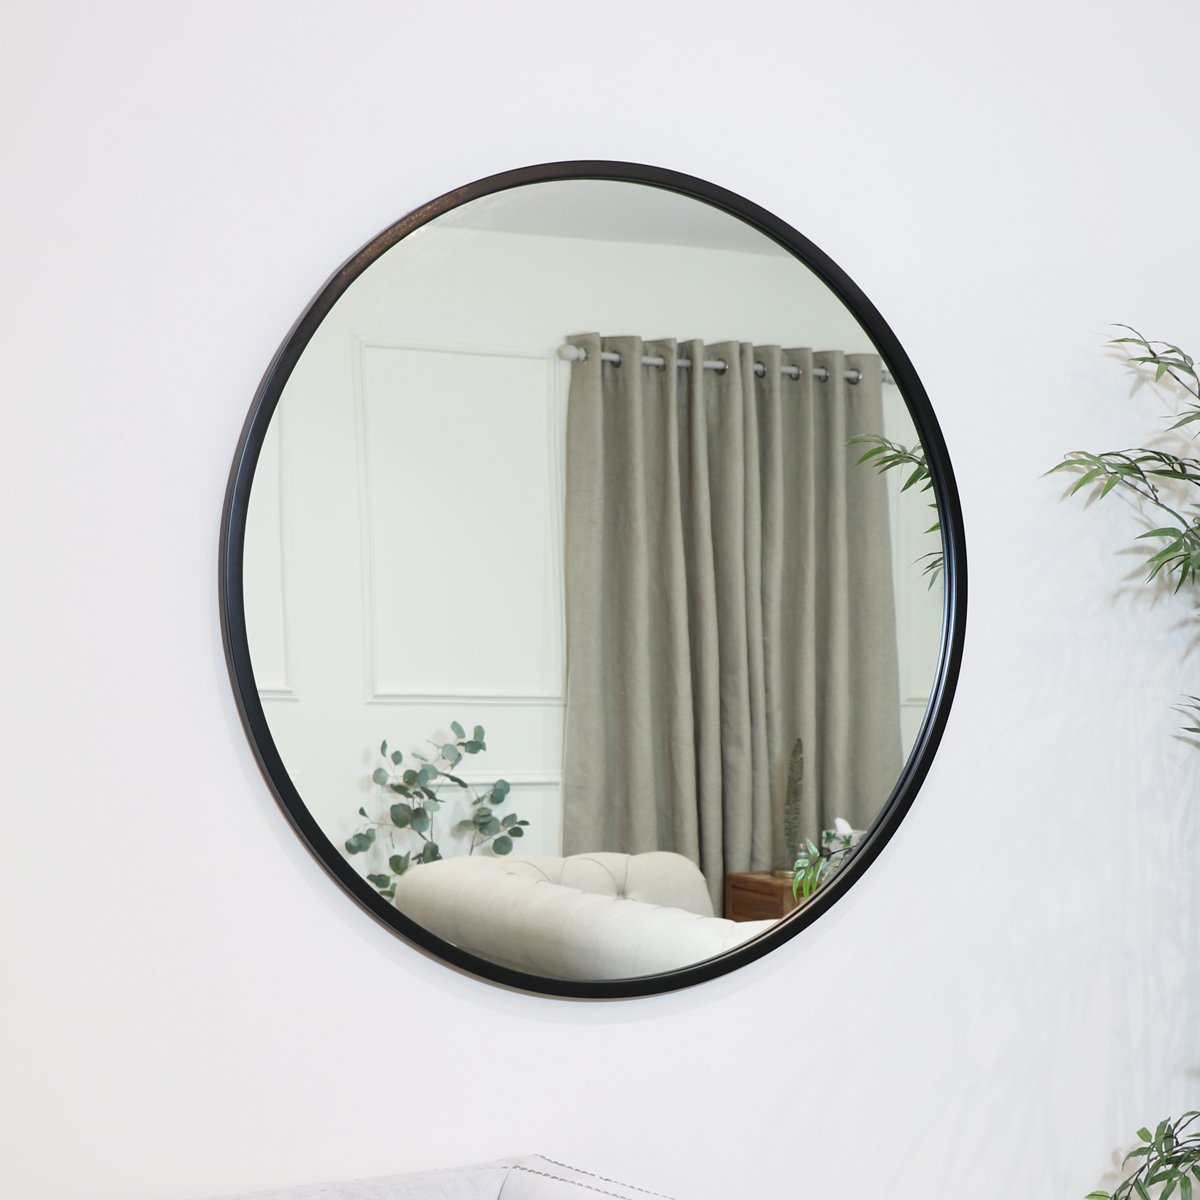 New Arrivals - Decorative Mirrors | Linen Chest Canada | Linen Chest Canada